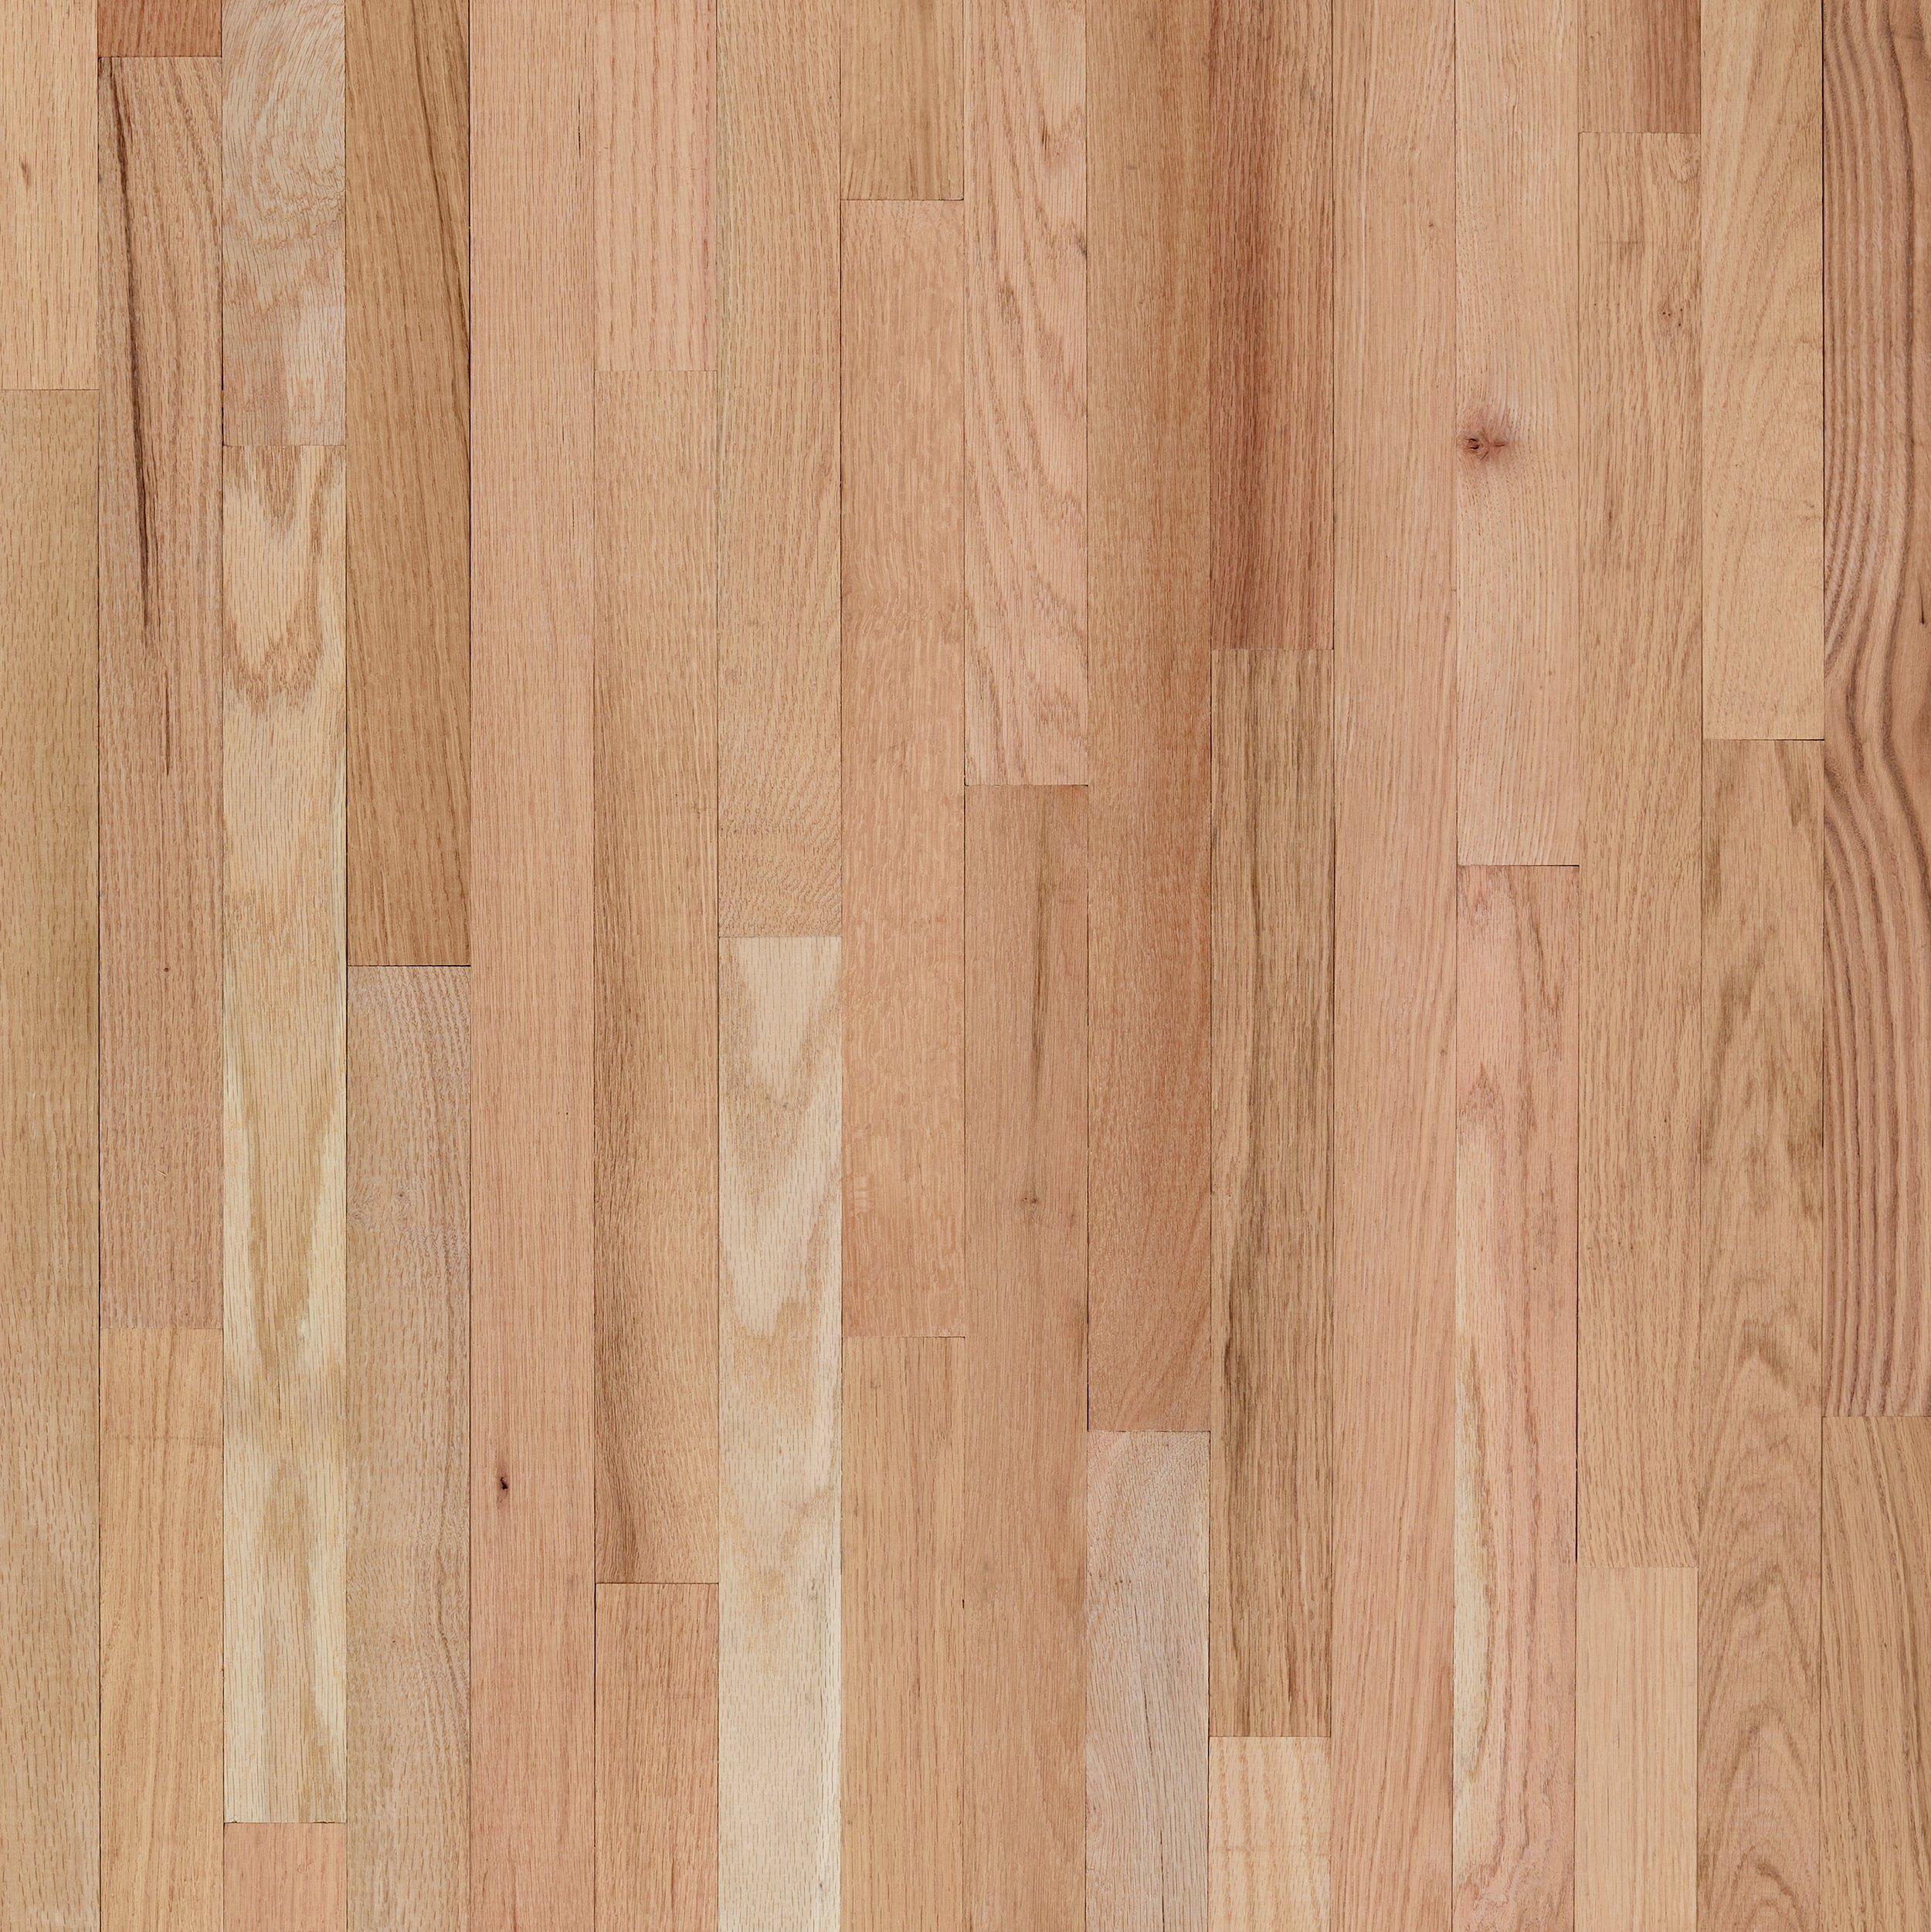 Unfinished Red Oak Solid Hardwood 1 Common Grade